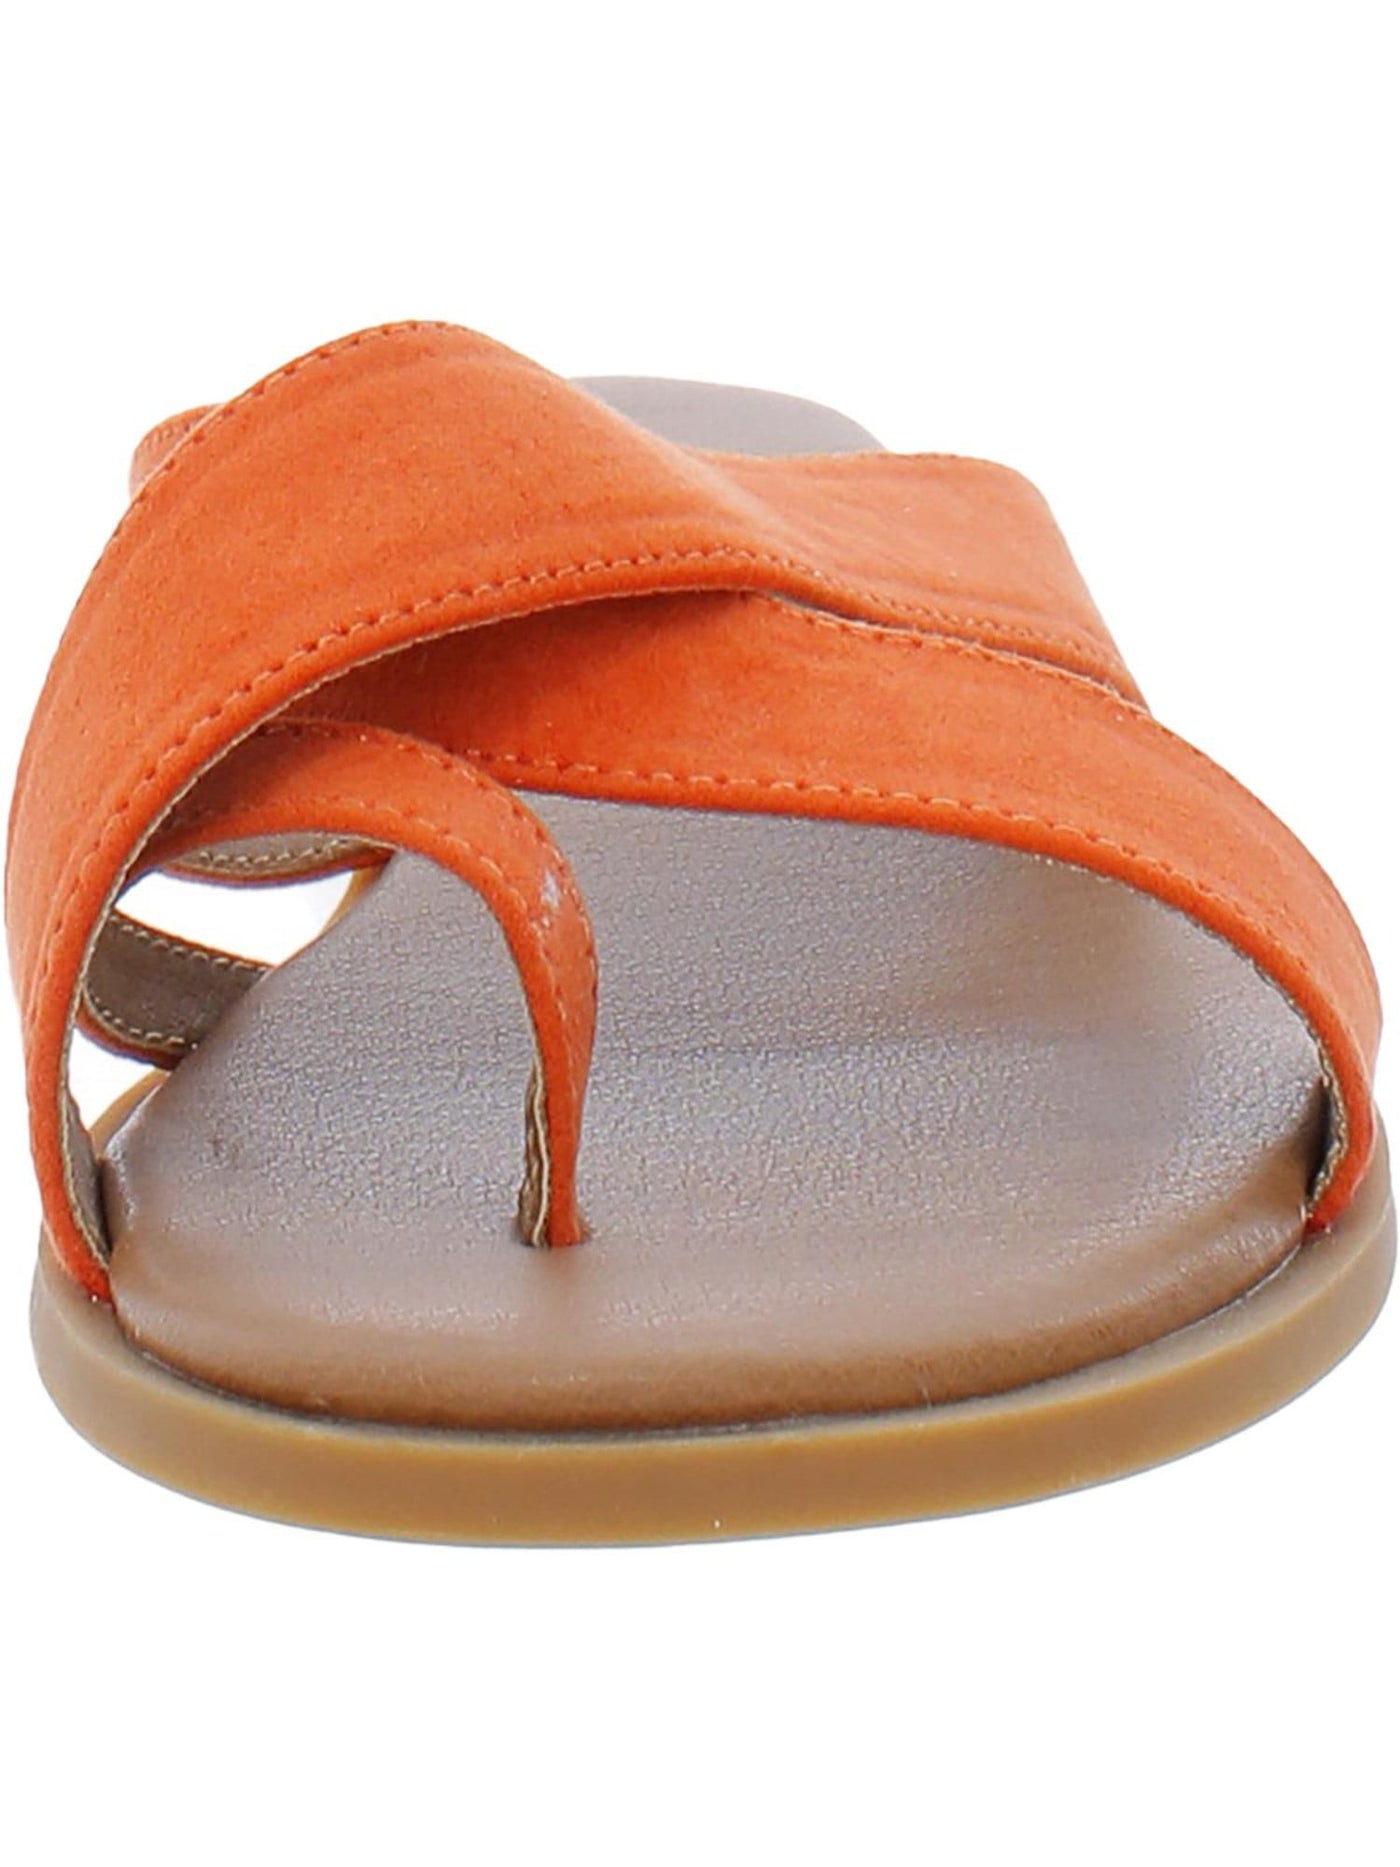 STYLE & COMPANY Womens Orange Cushioned Carolyn Round Toe Slip On Sandals Shoes 7 M